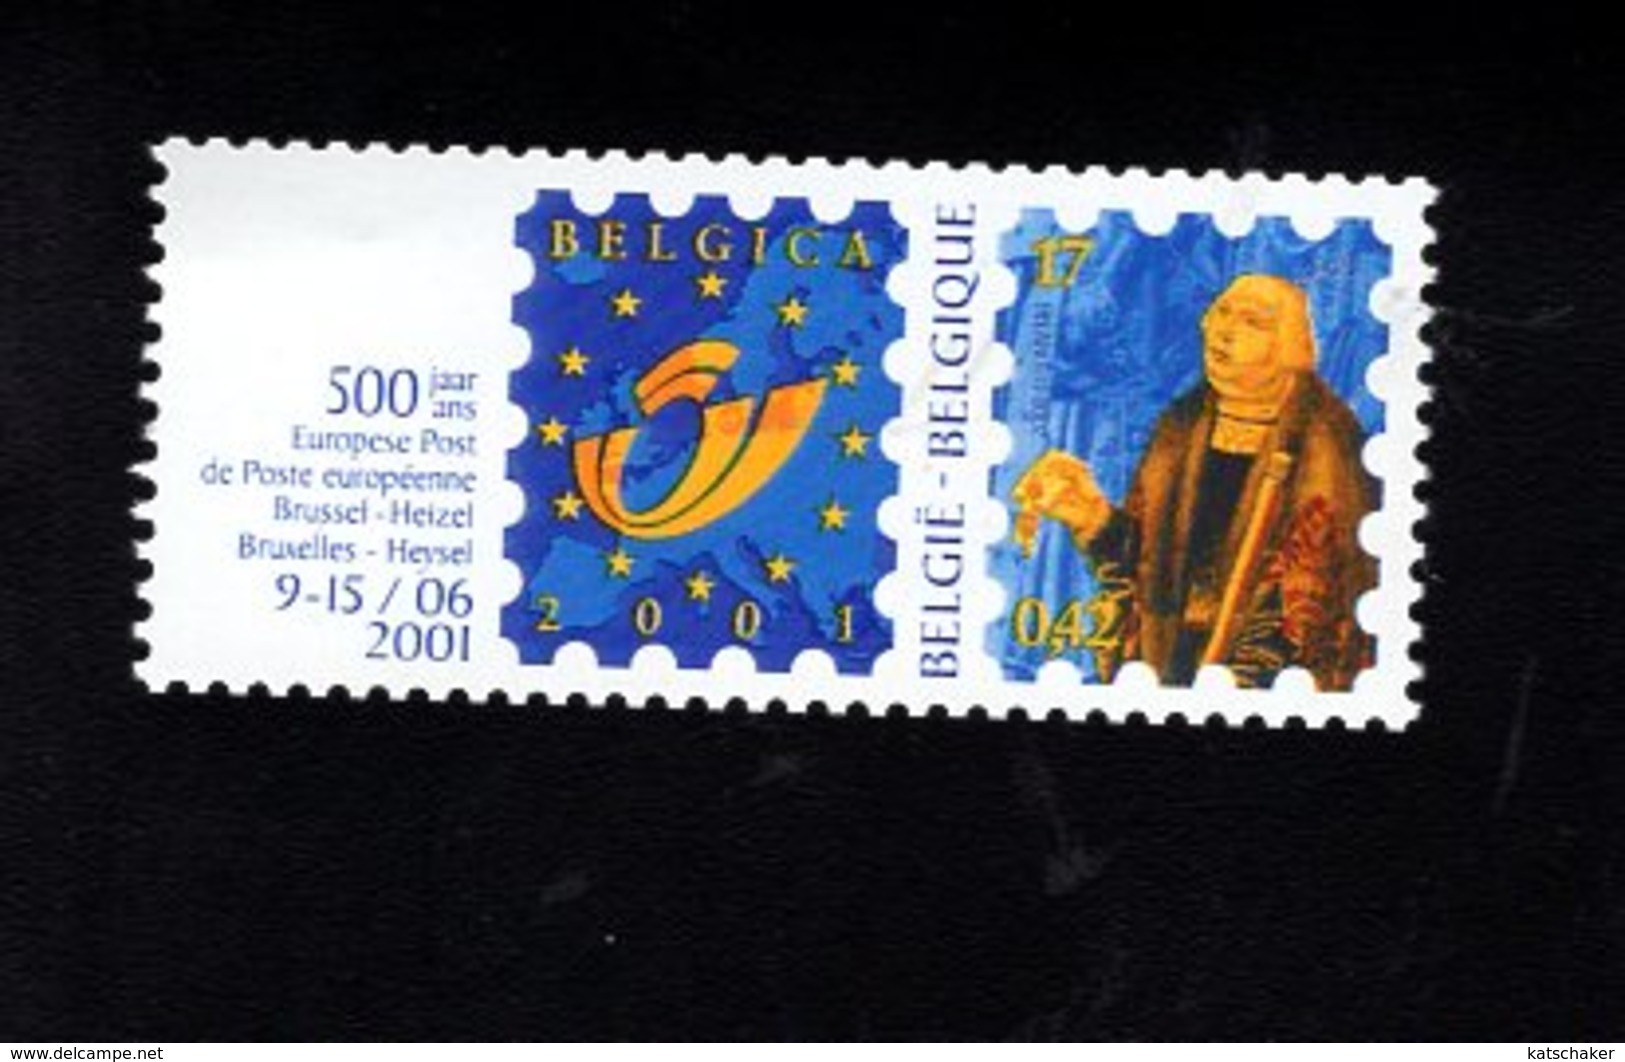 703891699 BELGIUM POSTFRIS MINT NEVER HINGED POSTFRISCH EINWANDFREI OCB R978 BELGICA 2001 - Coil Stamps